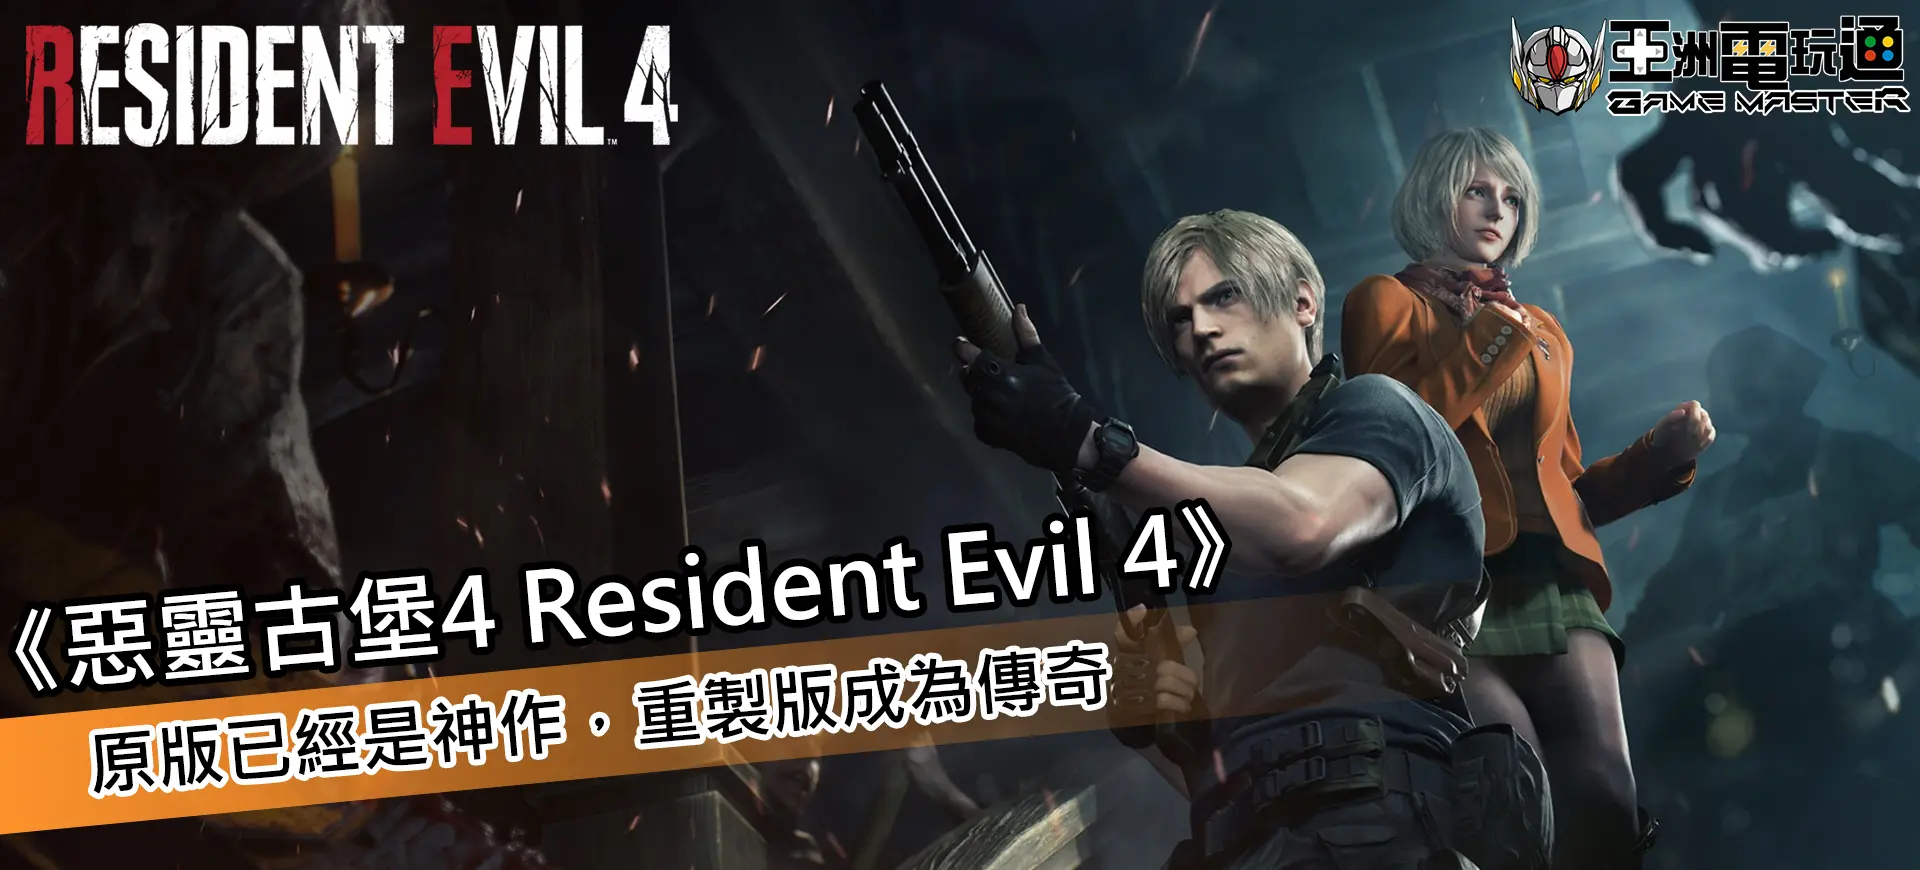 亞洲電玩通 - 惡靈古堡4 Resident Evil 4